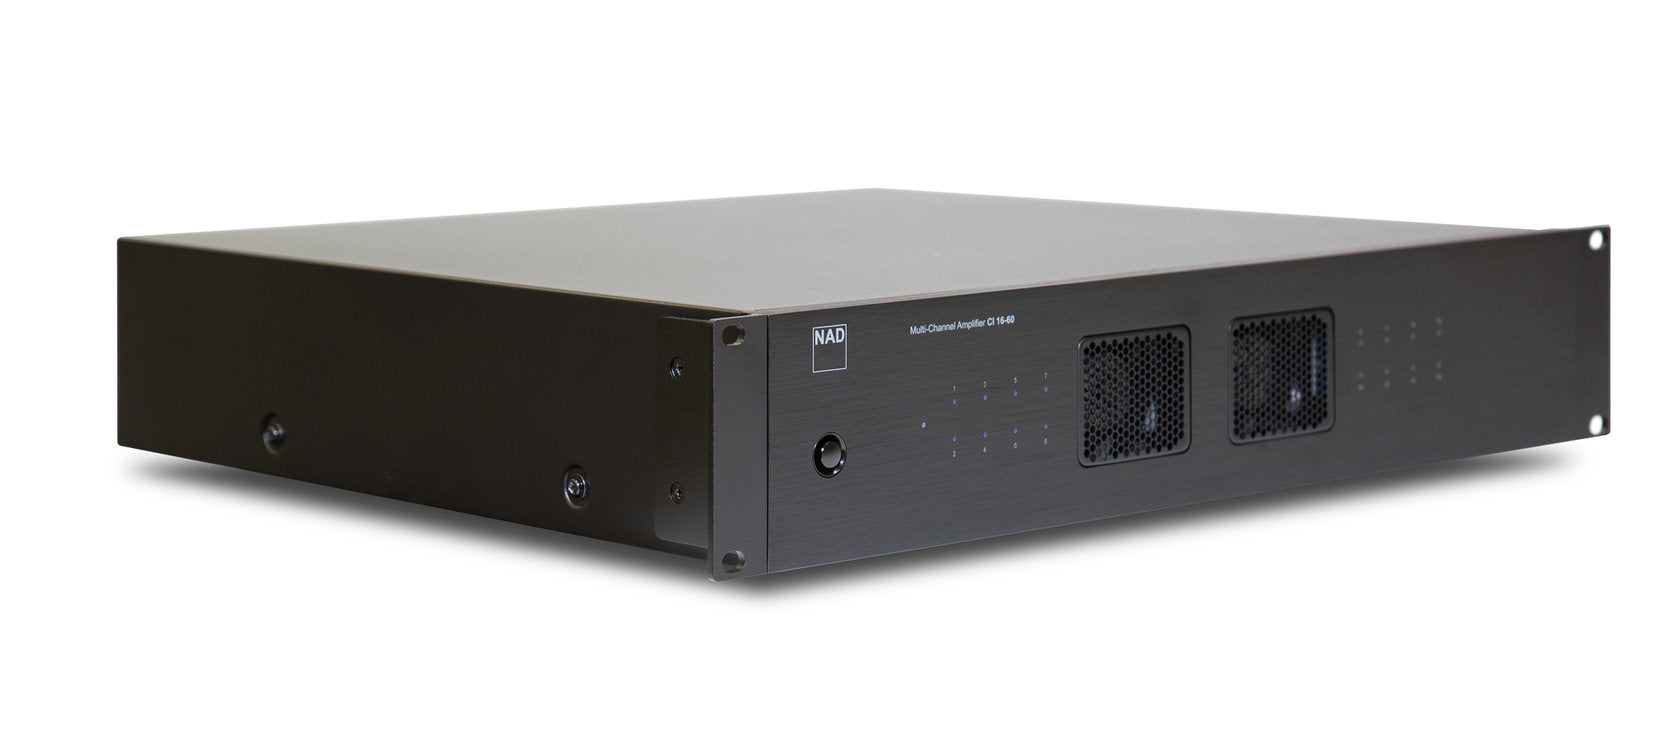 NAD CI 16-60 DSP power amplifier